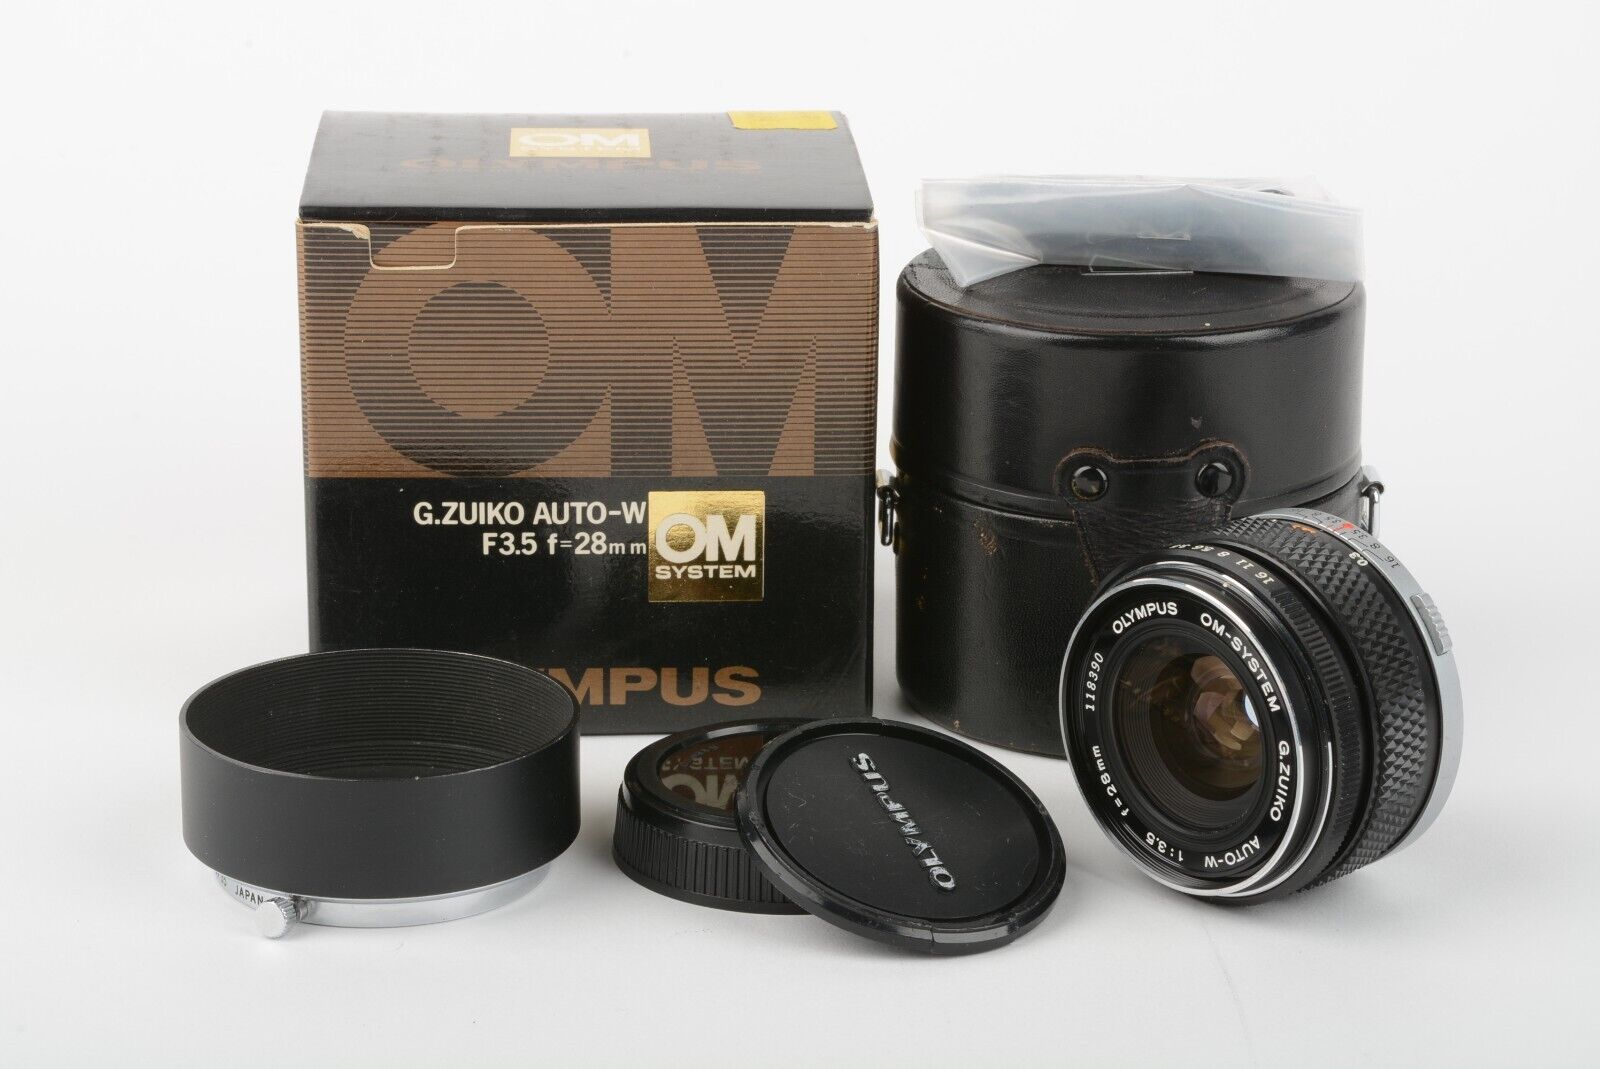 EXC++ OLYMPUS OM-SYSTEM G.ZUIKO AUTO-W 28mm f3.5 WIDE LENS, CASE